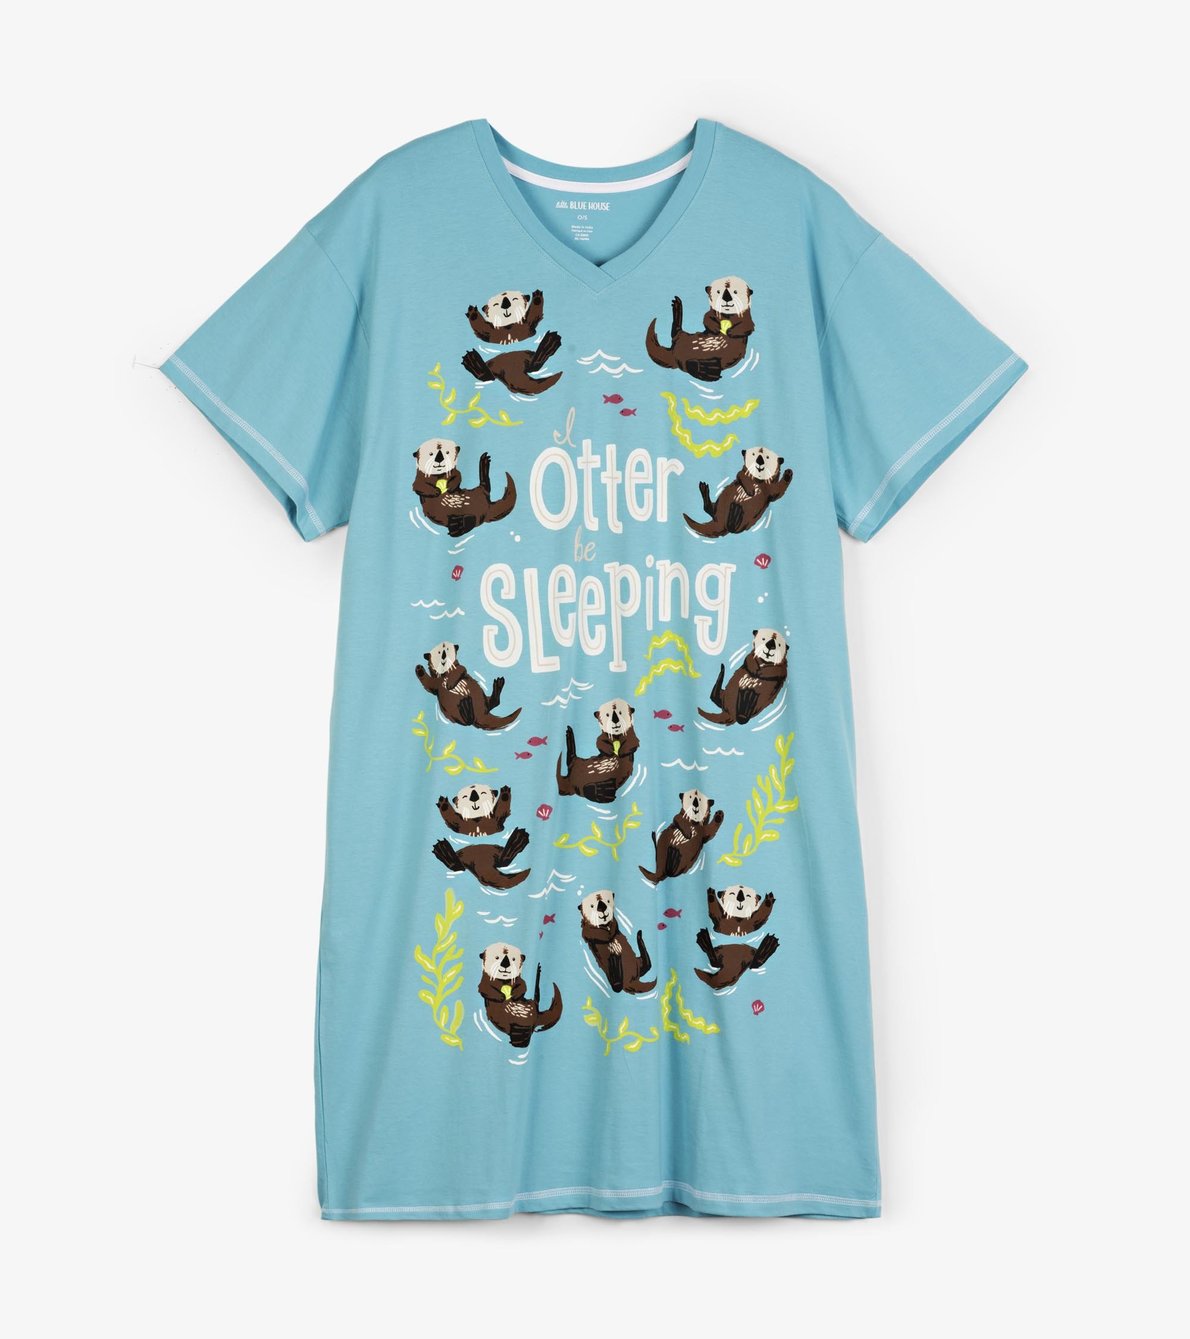 View larger image of I Otter Be Sleeping Women's Sleepshirt